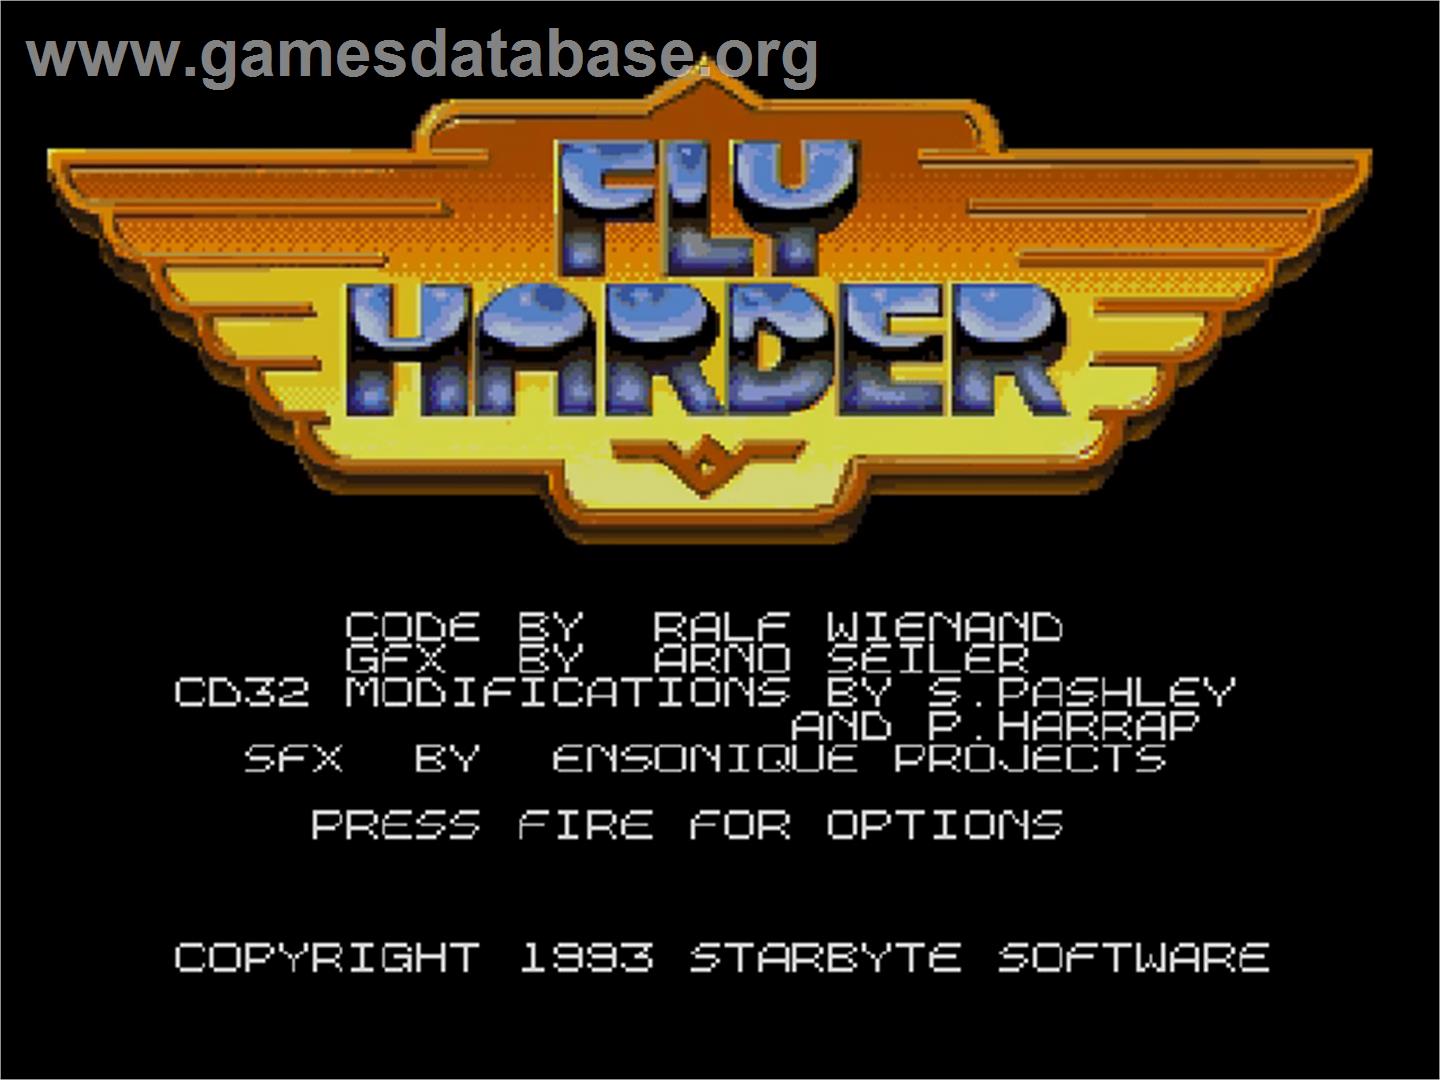 Fly Harder - Commodore Amiga CD32 - Artwork - Title Screen